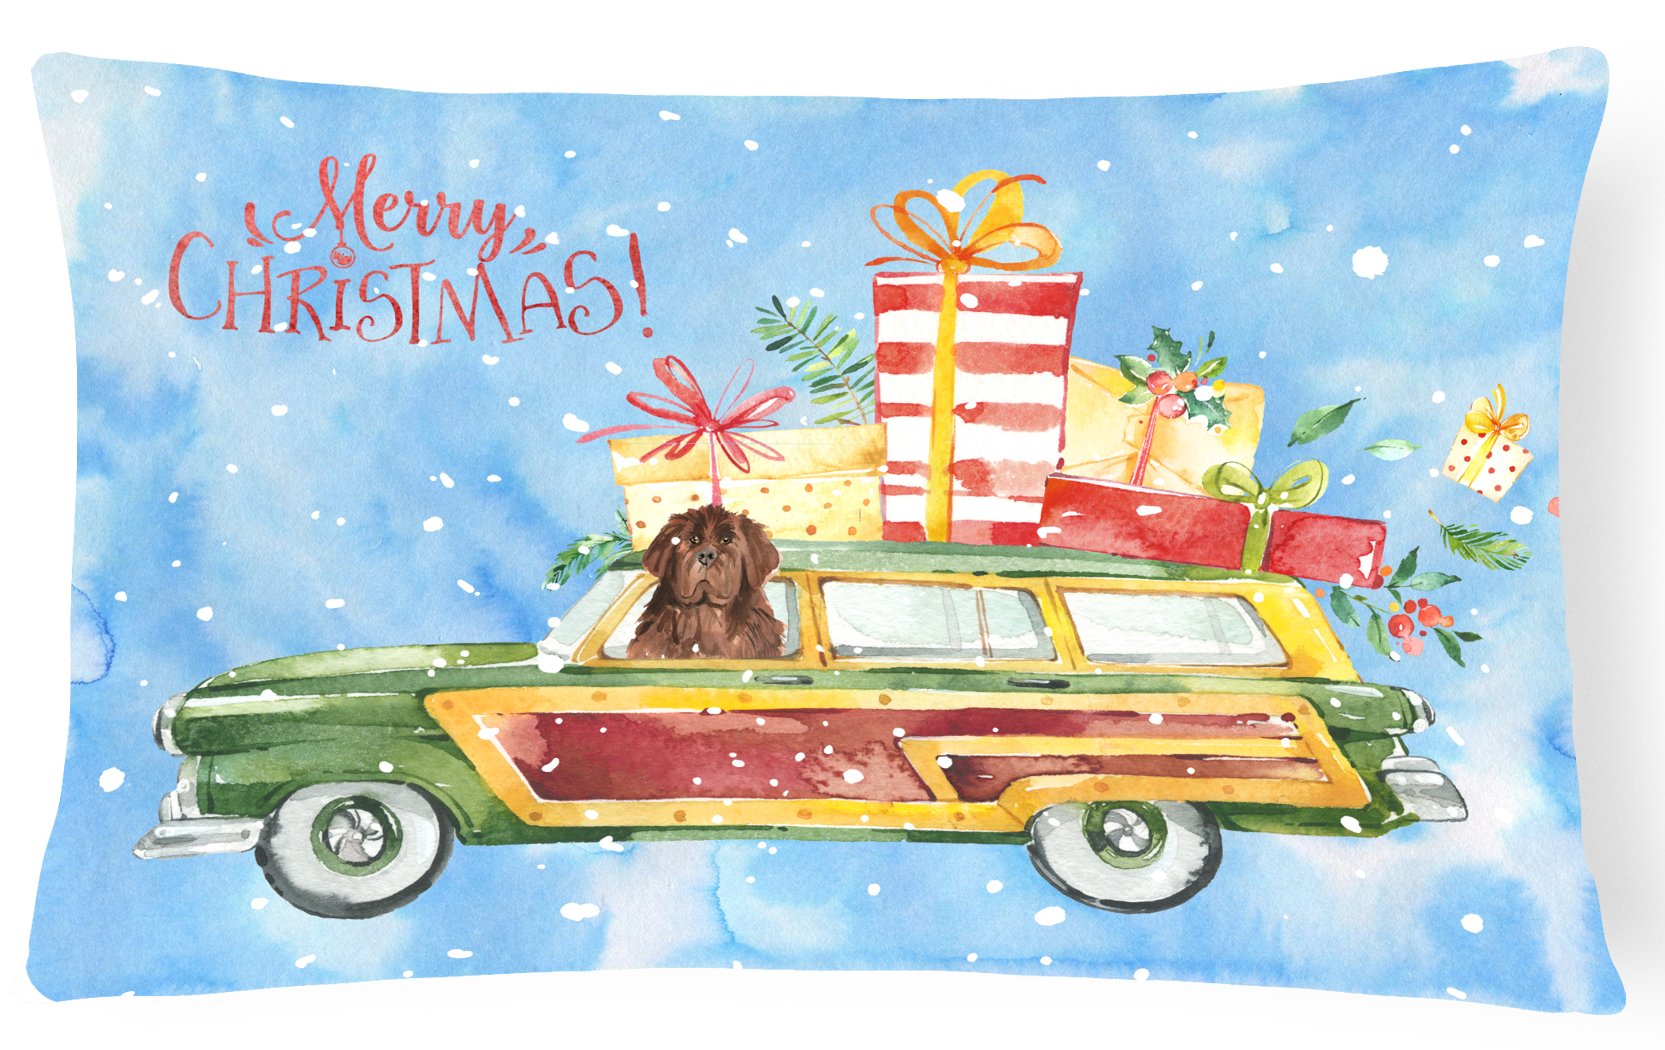 Merry Christmas Newfoundland Canvas Fabric Decorative Pillow CK2416PW1216 by Caroline's Treasures